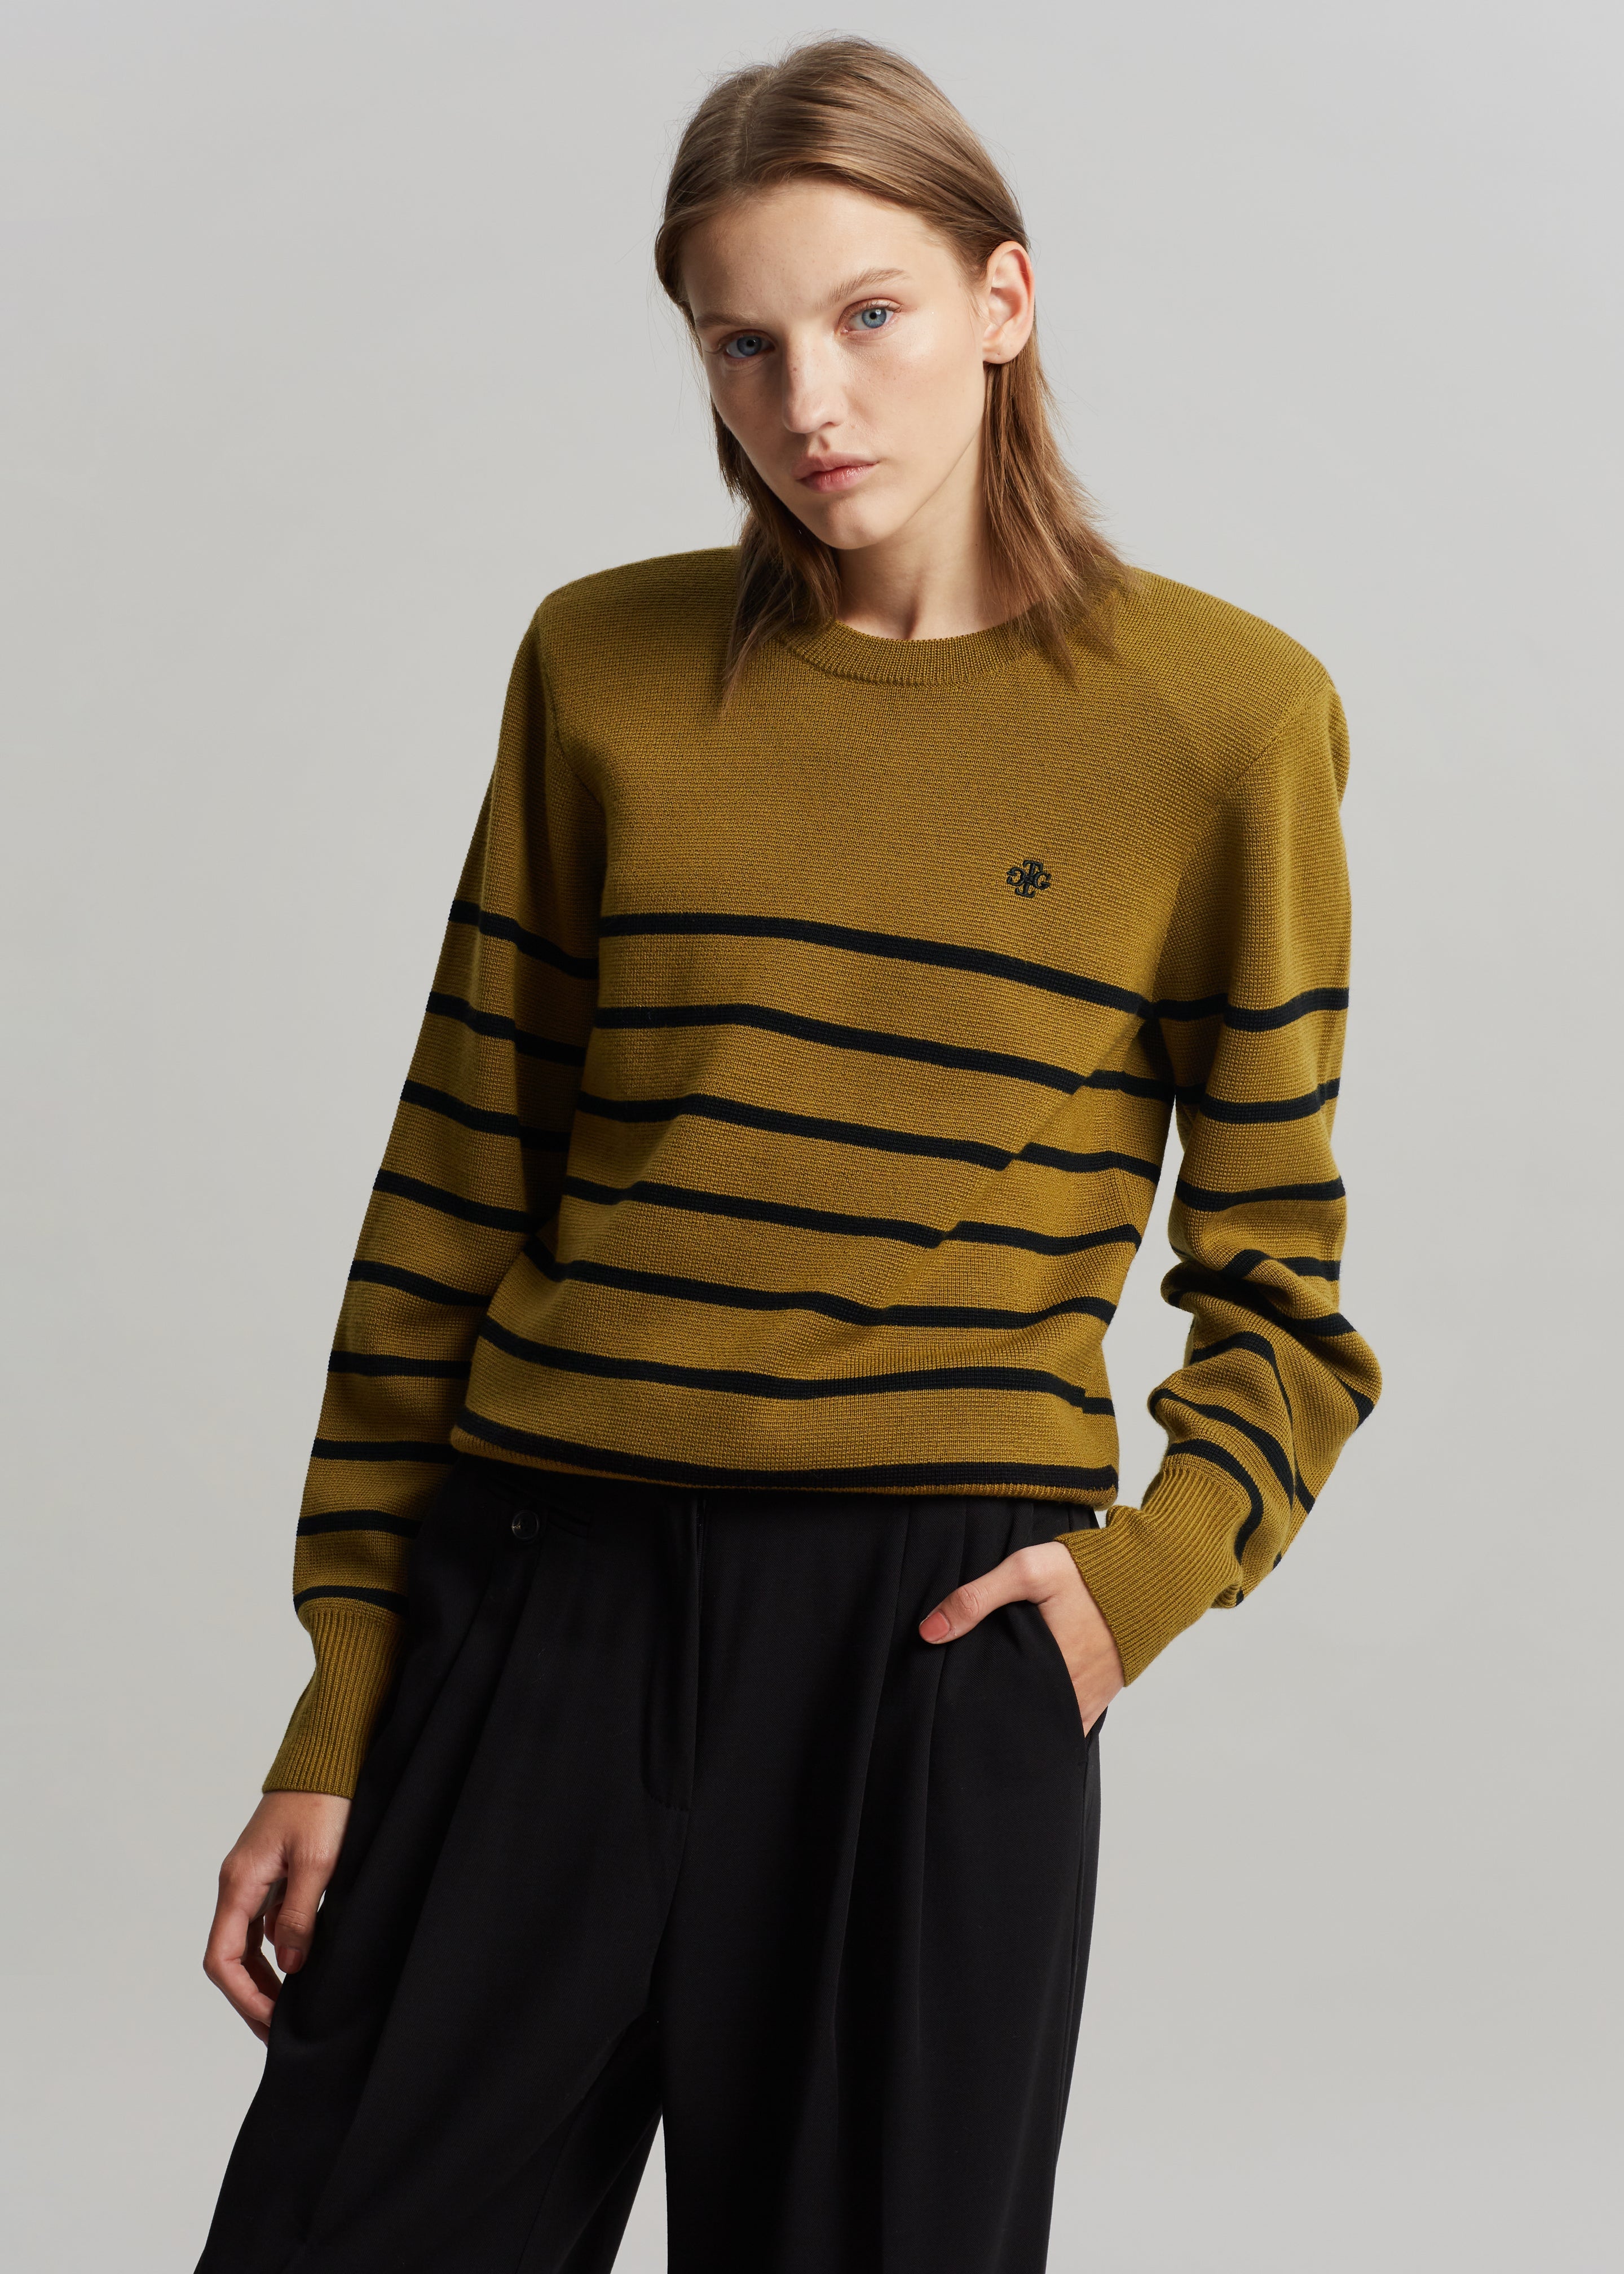 The Garment St Moritz Sweater - Mustard/Black Stripes - 2